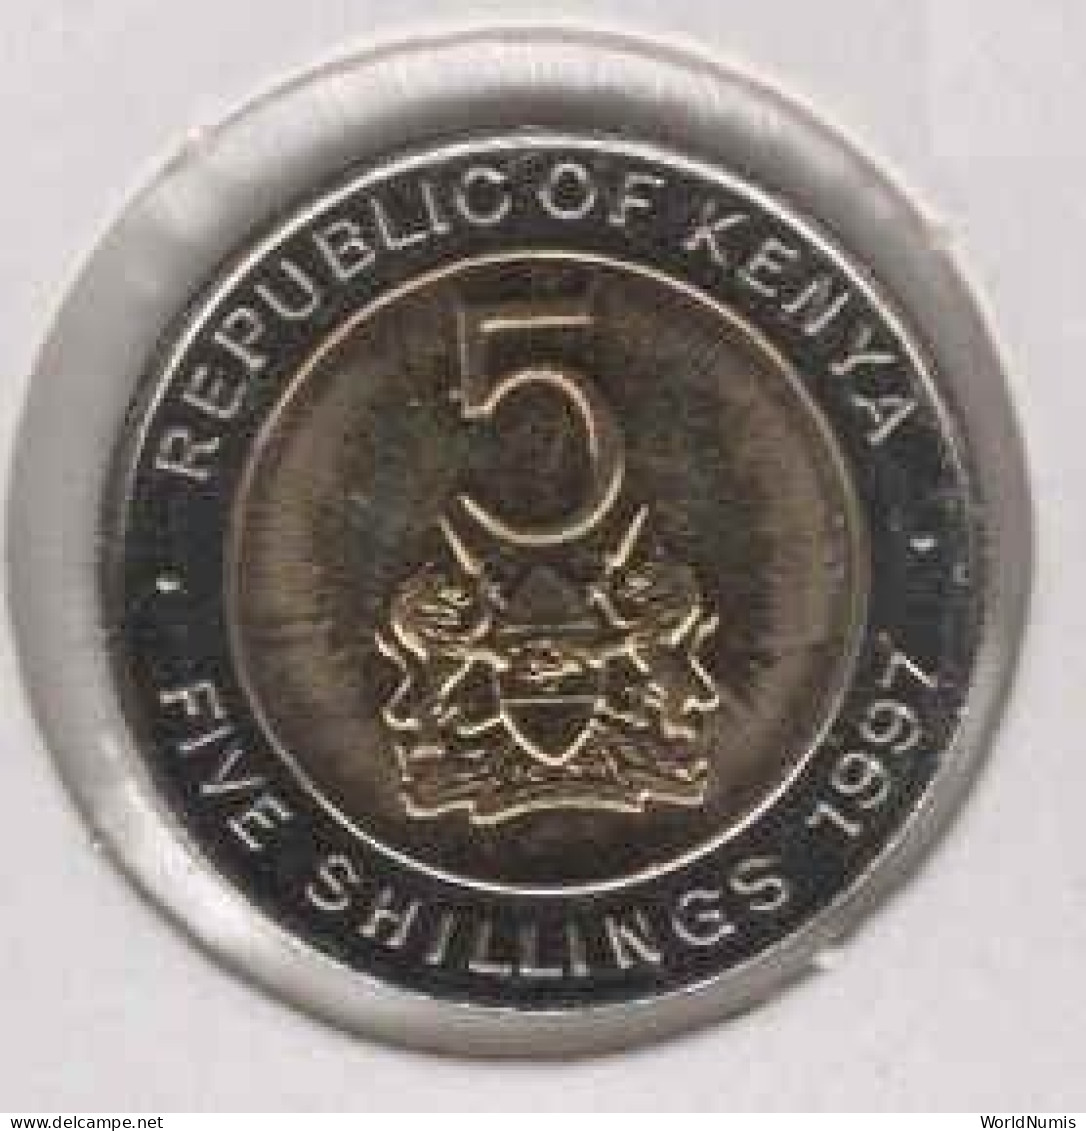 Kenya - 5 Shilling 1997 - Bimetallic - Kenya